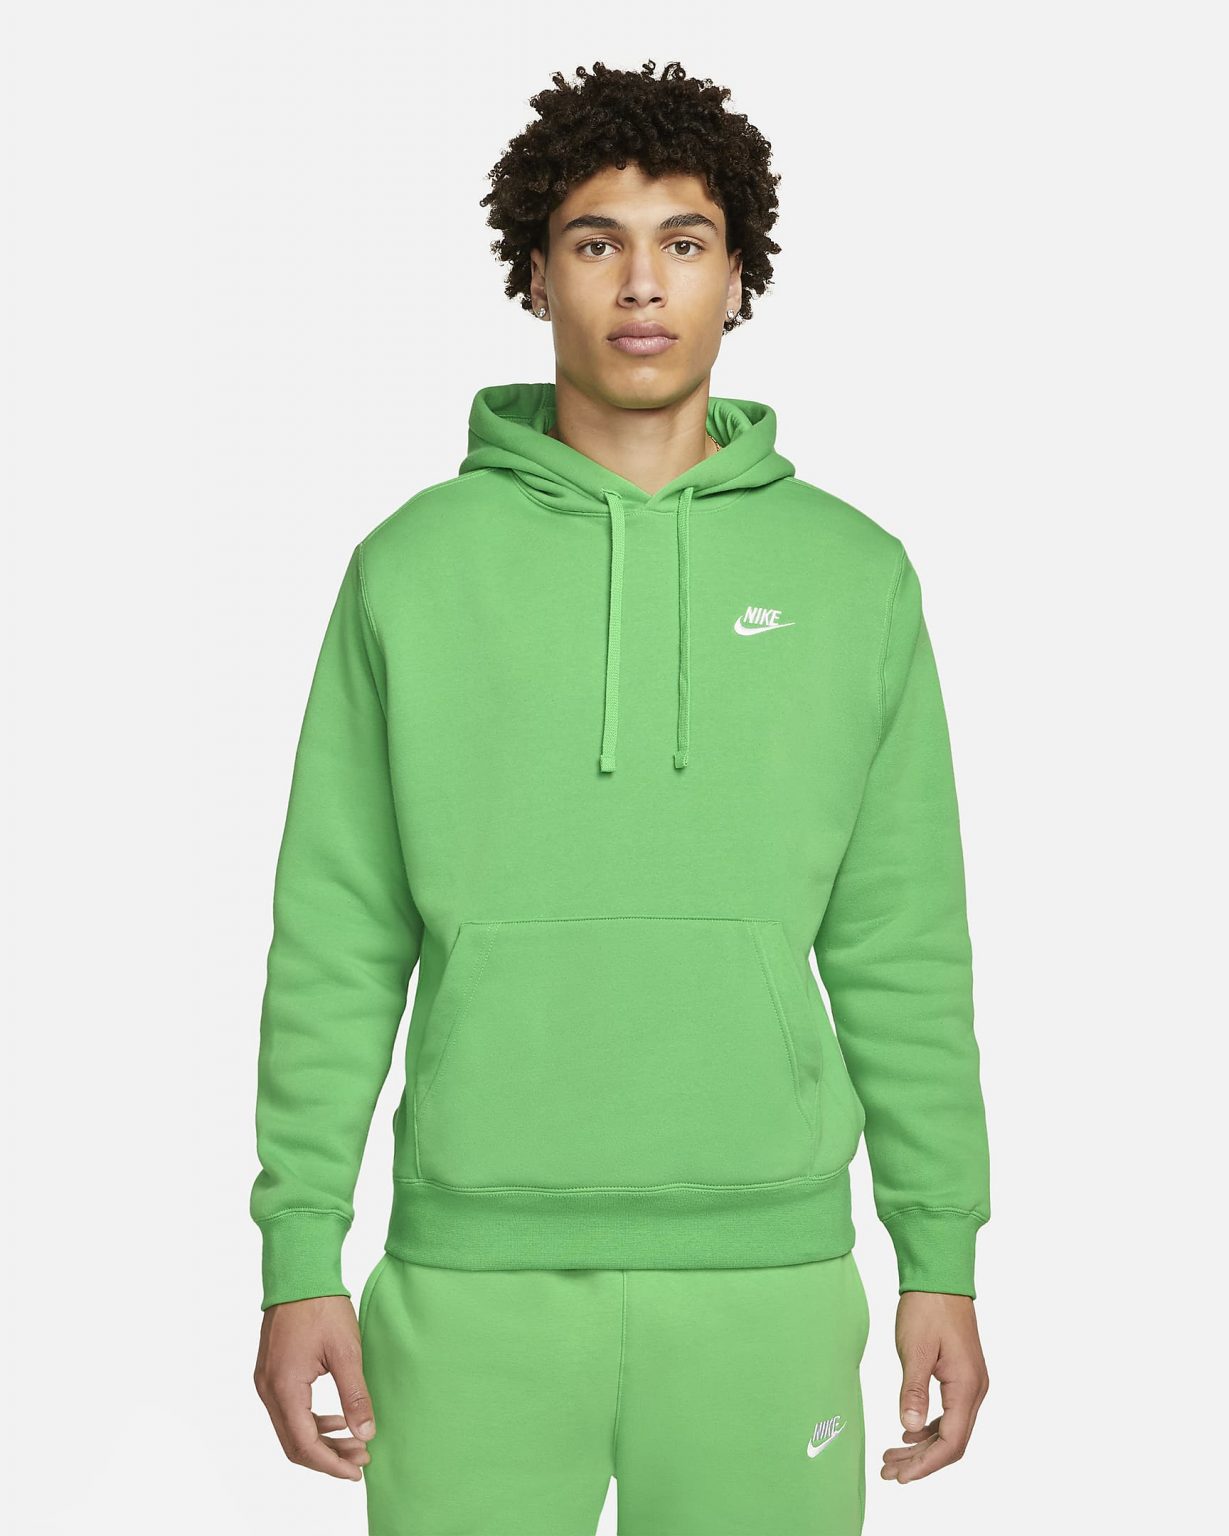 Nike Air Max 90 Scream Green Shirts Clothing Outfits